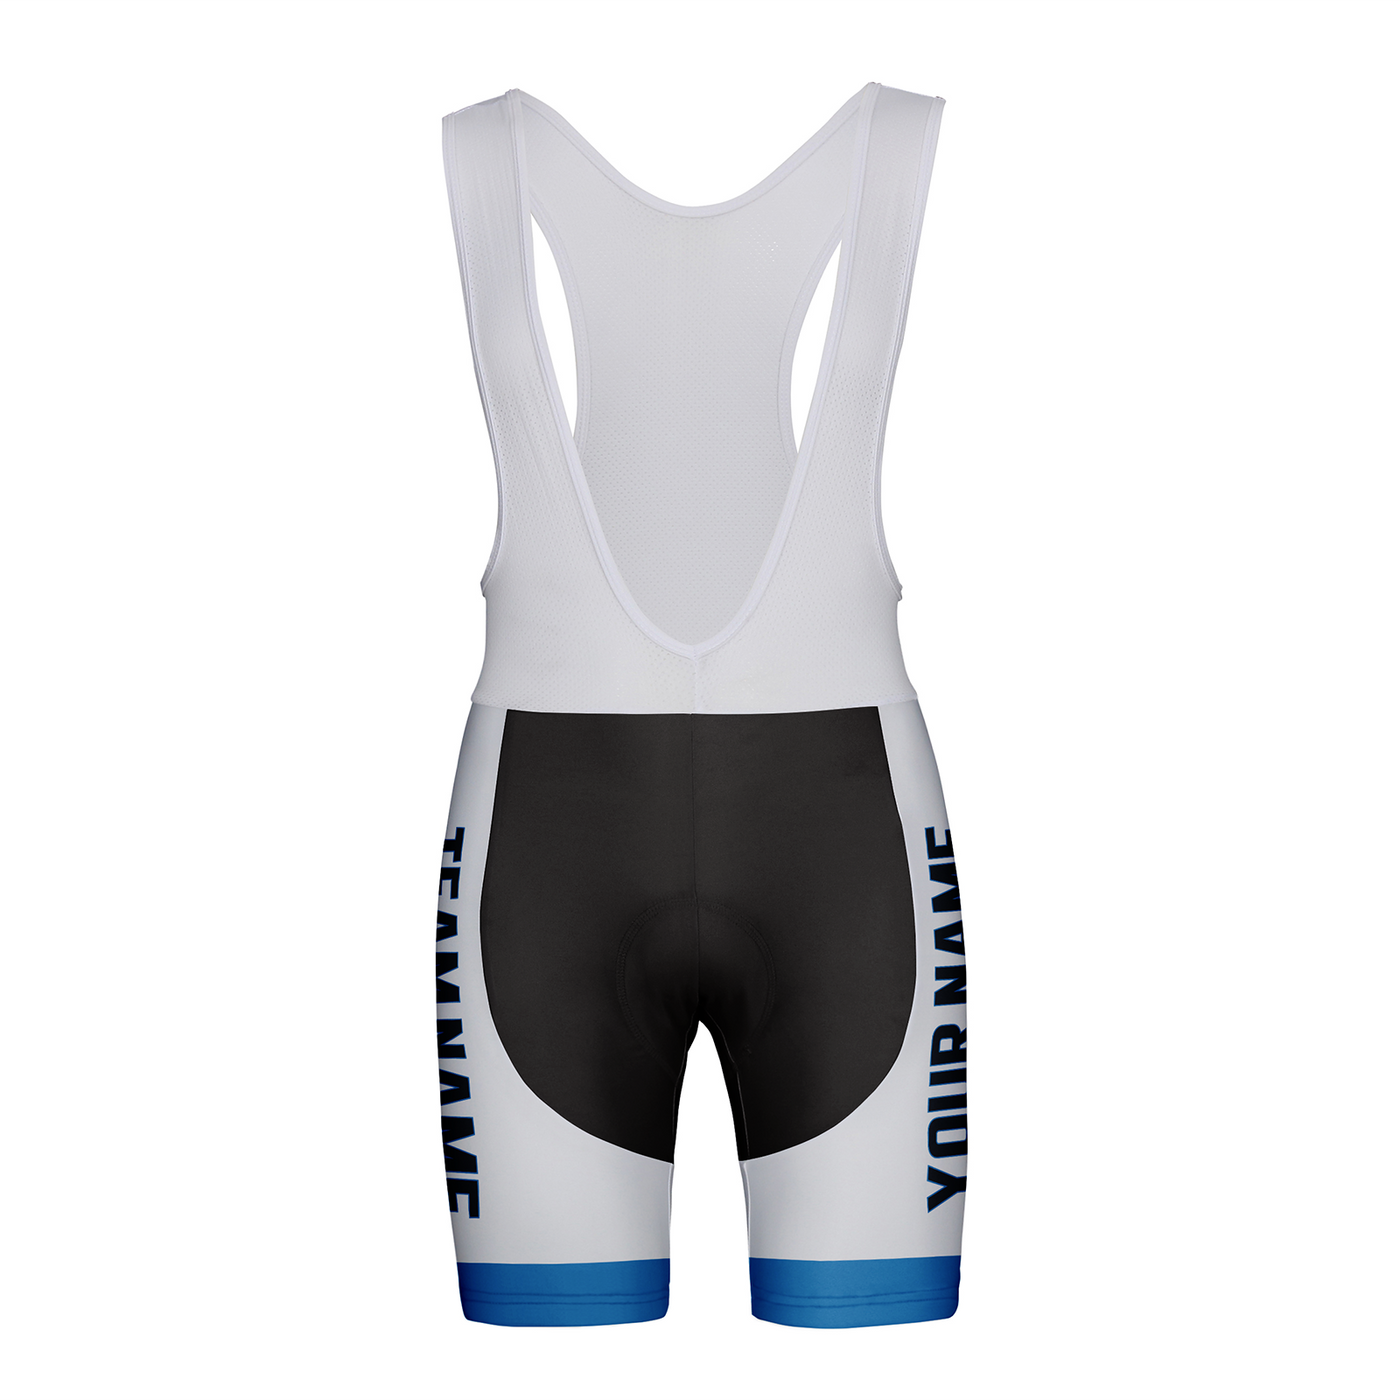 Customized Tennessee Team Unisex Cycling Bib Shorts